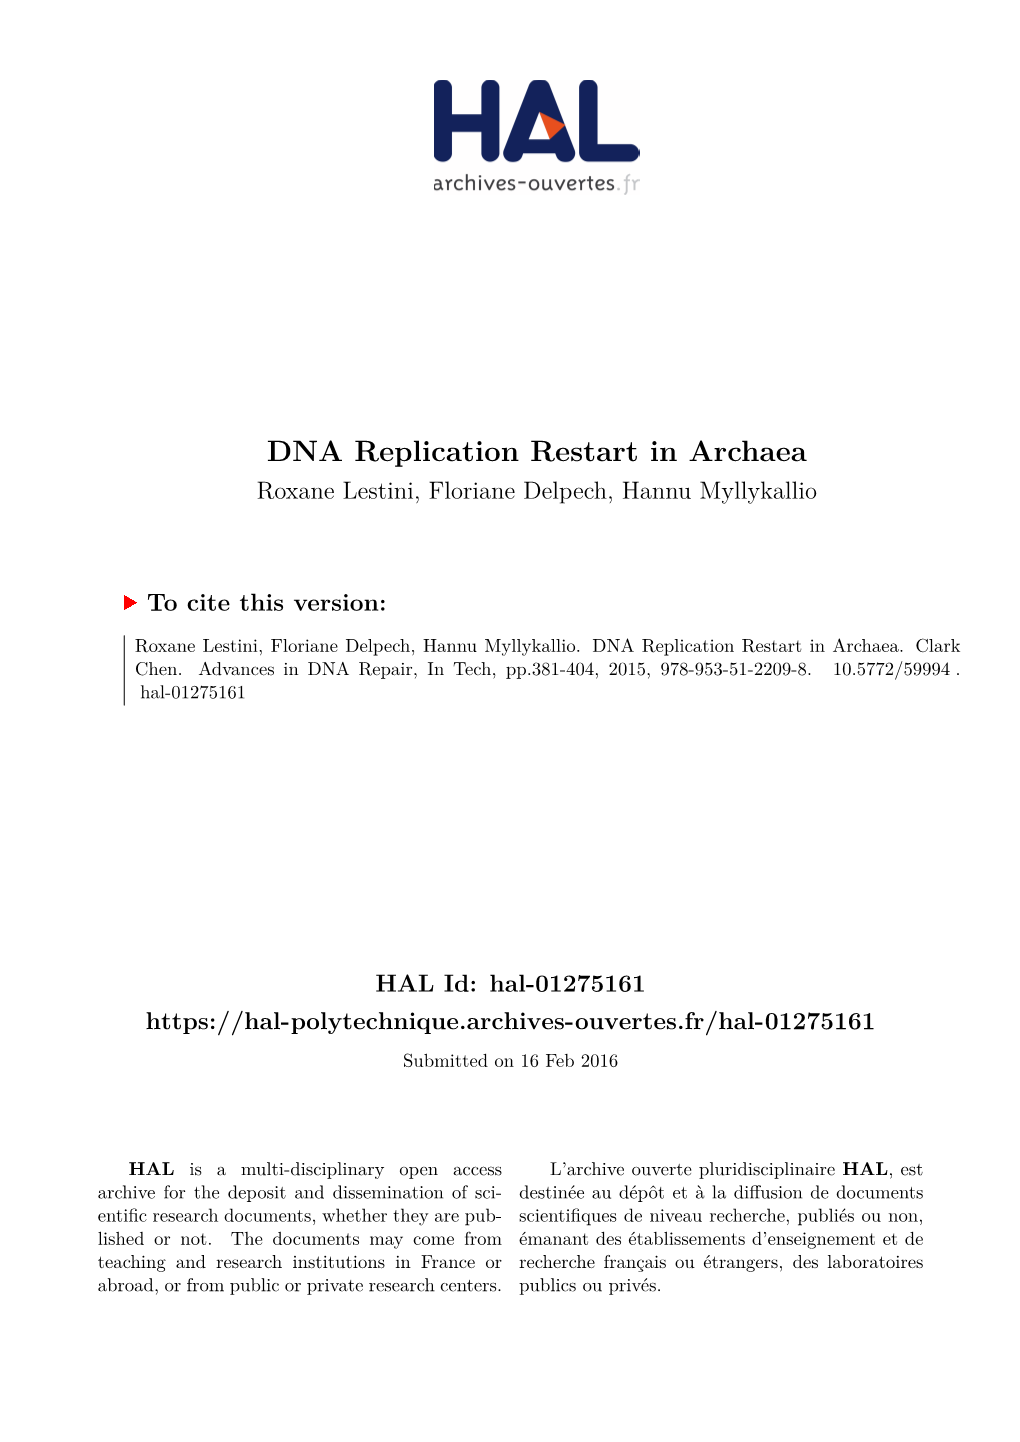 DNA Replication Restart in Archaea Roxane Lestini, Floriane Delpech, Hannu Myllykallio